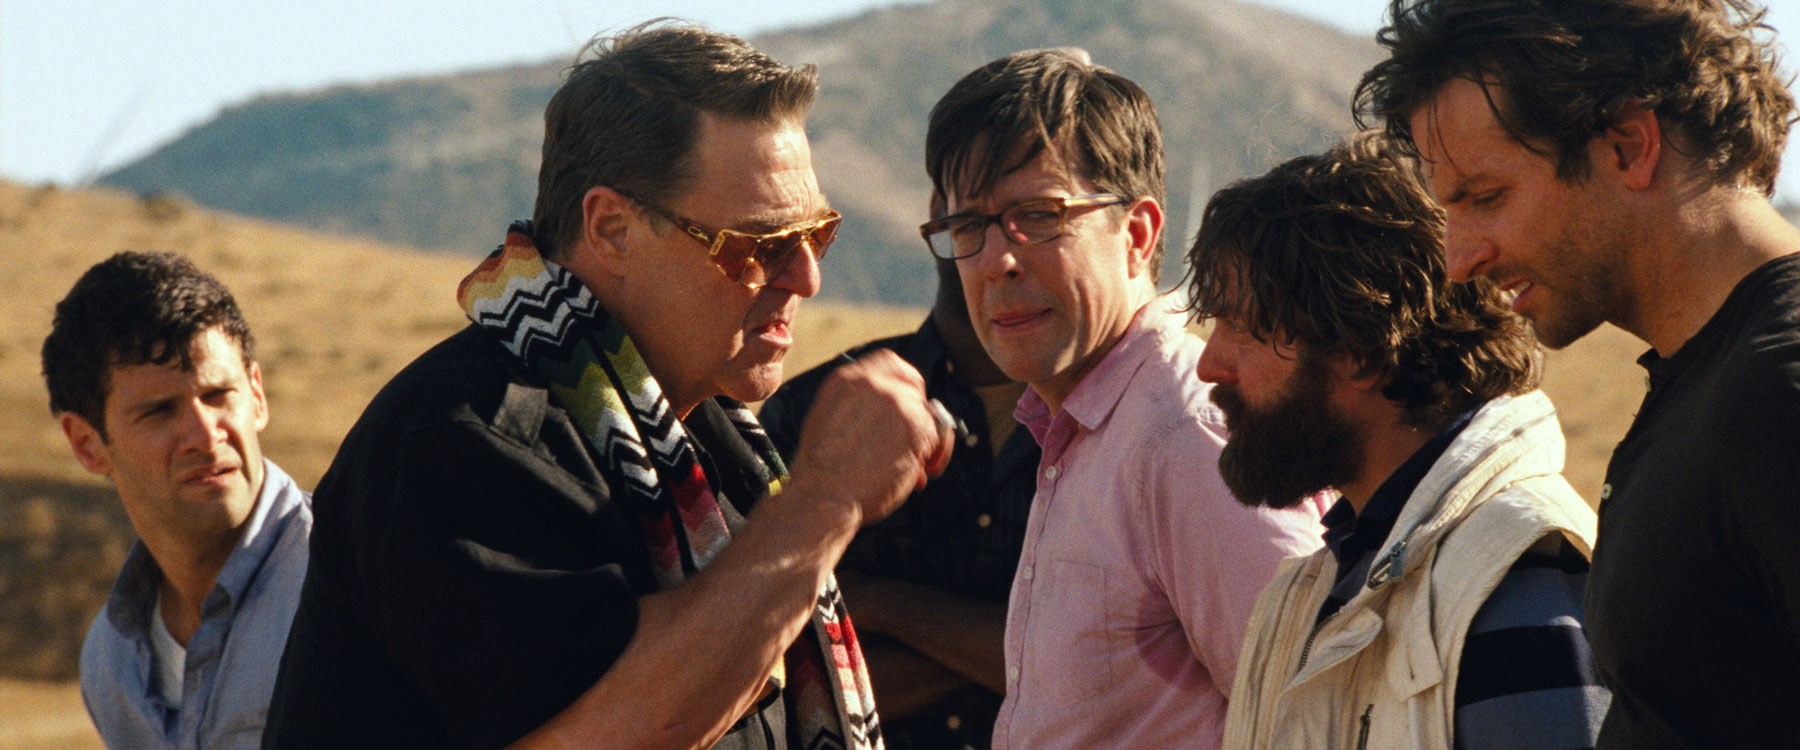 Justin Bartha, John Goodman, Ed Helms, Zach Galifianakis and Bradley Cooper in Warner Bros. Pictures' The Hangover Part III (2013)